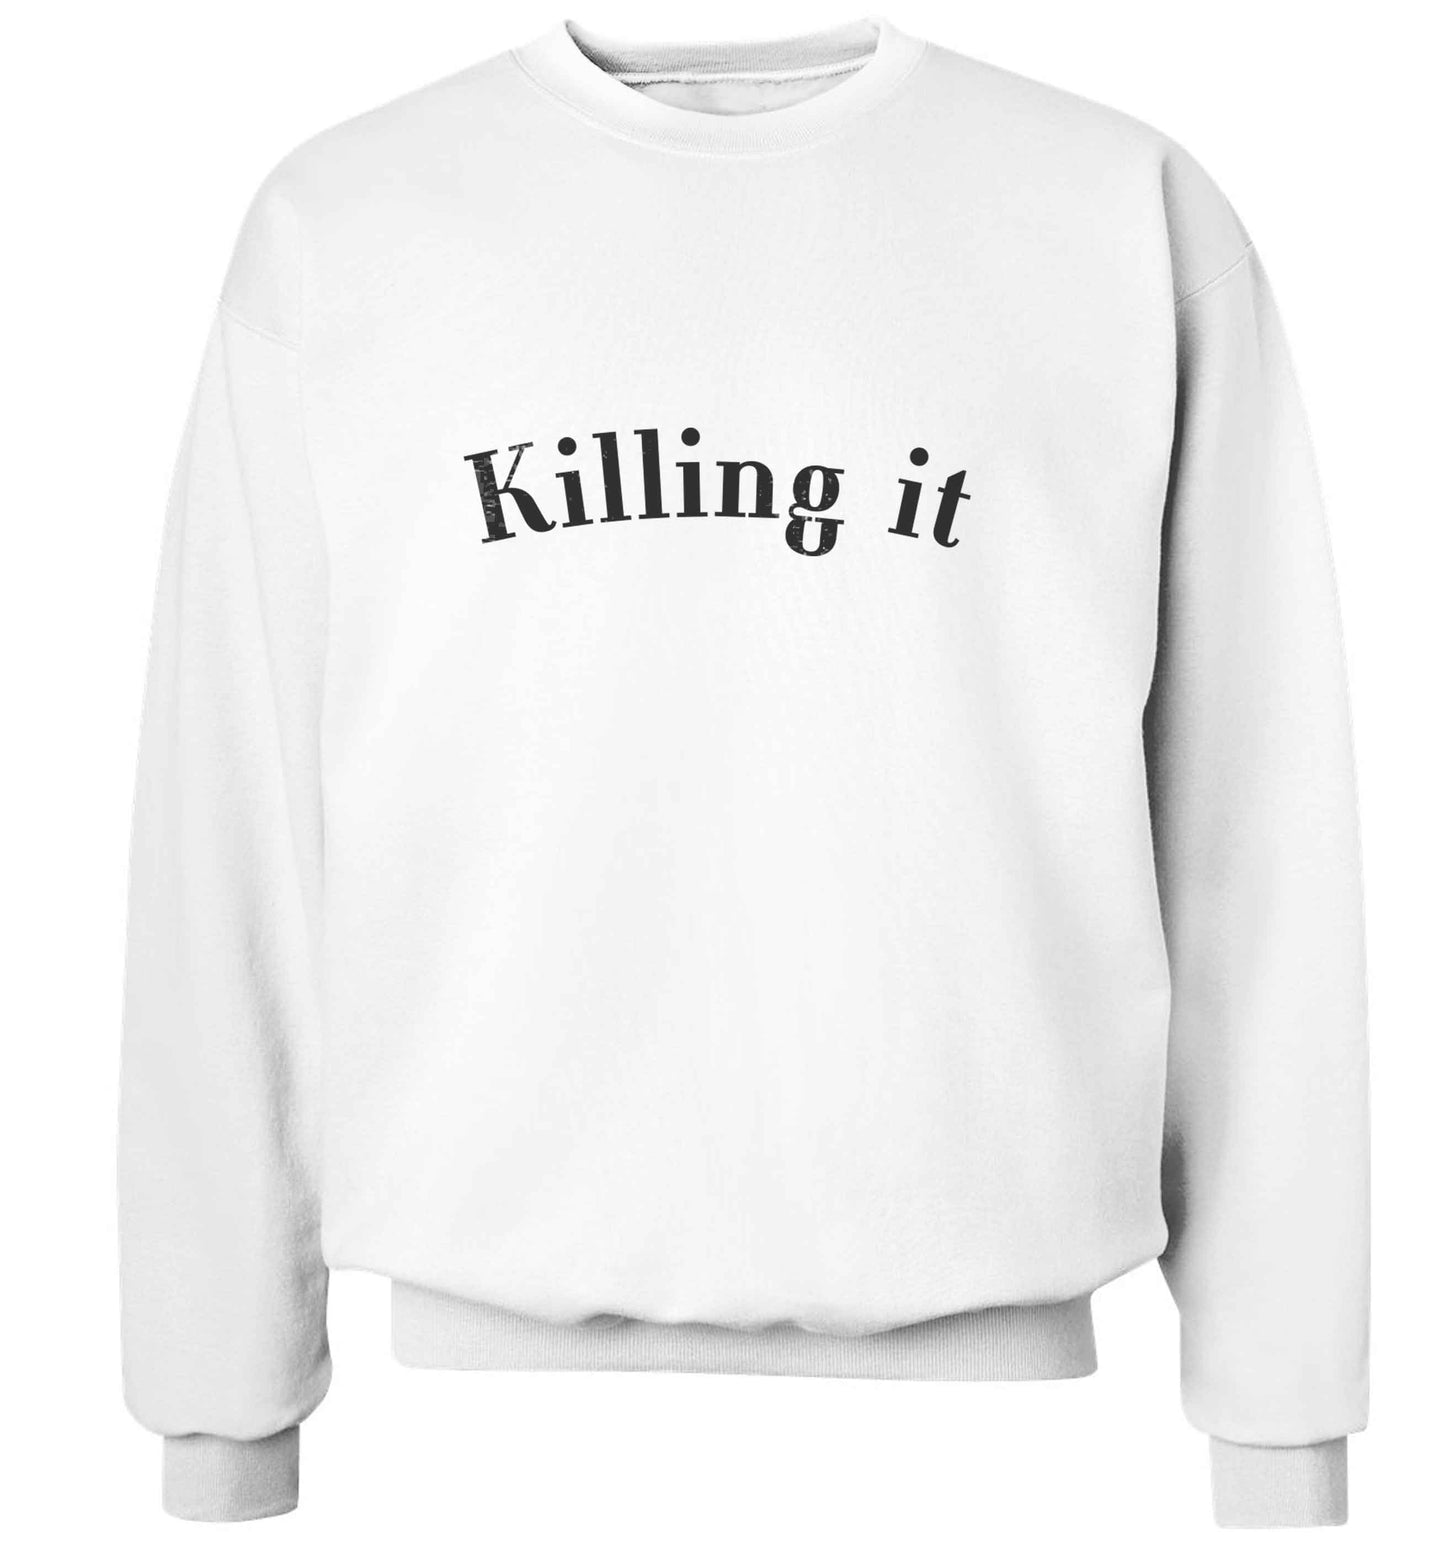 Killing it adult's unisex white sweater 2XL